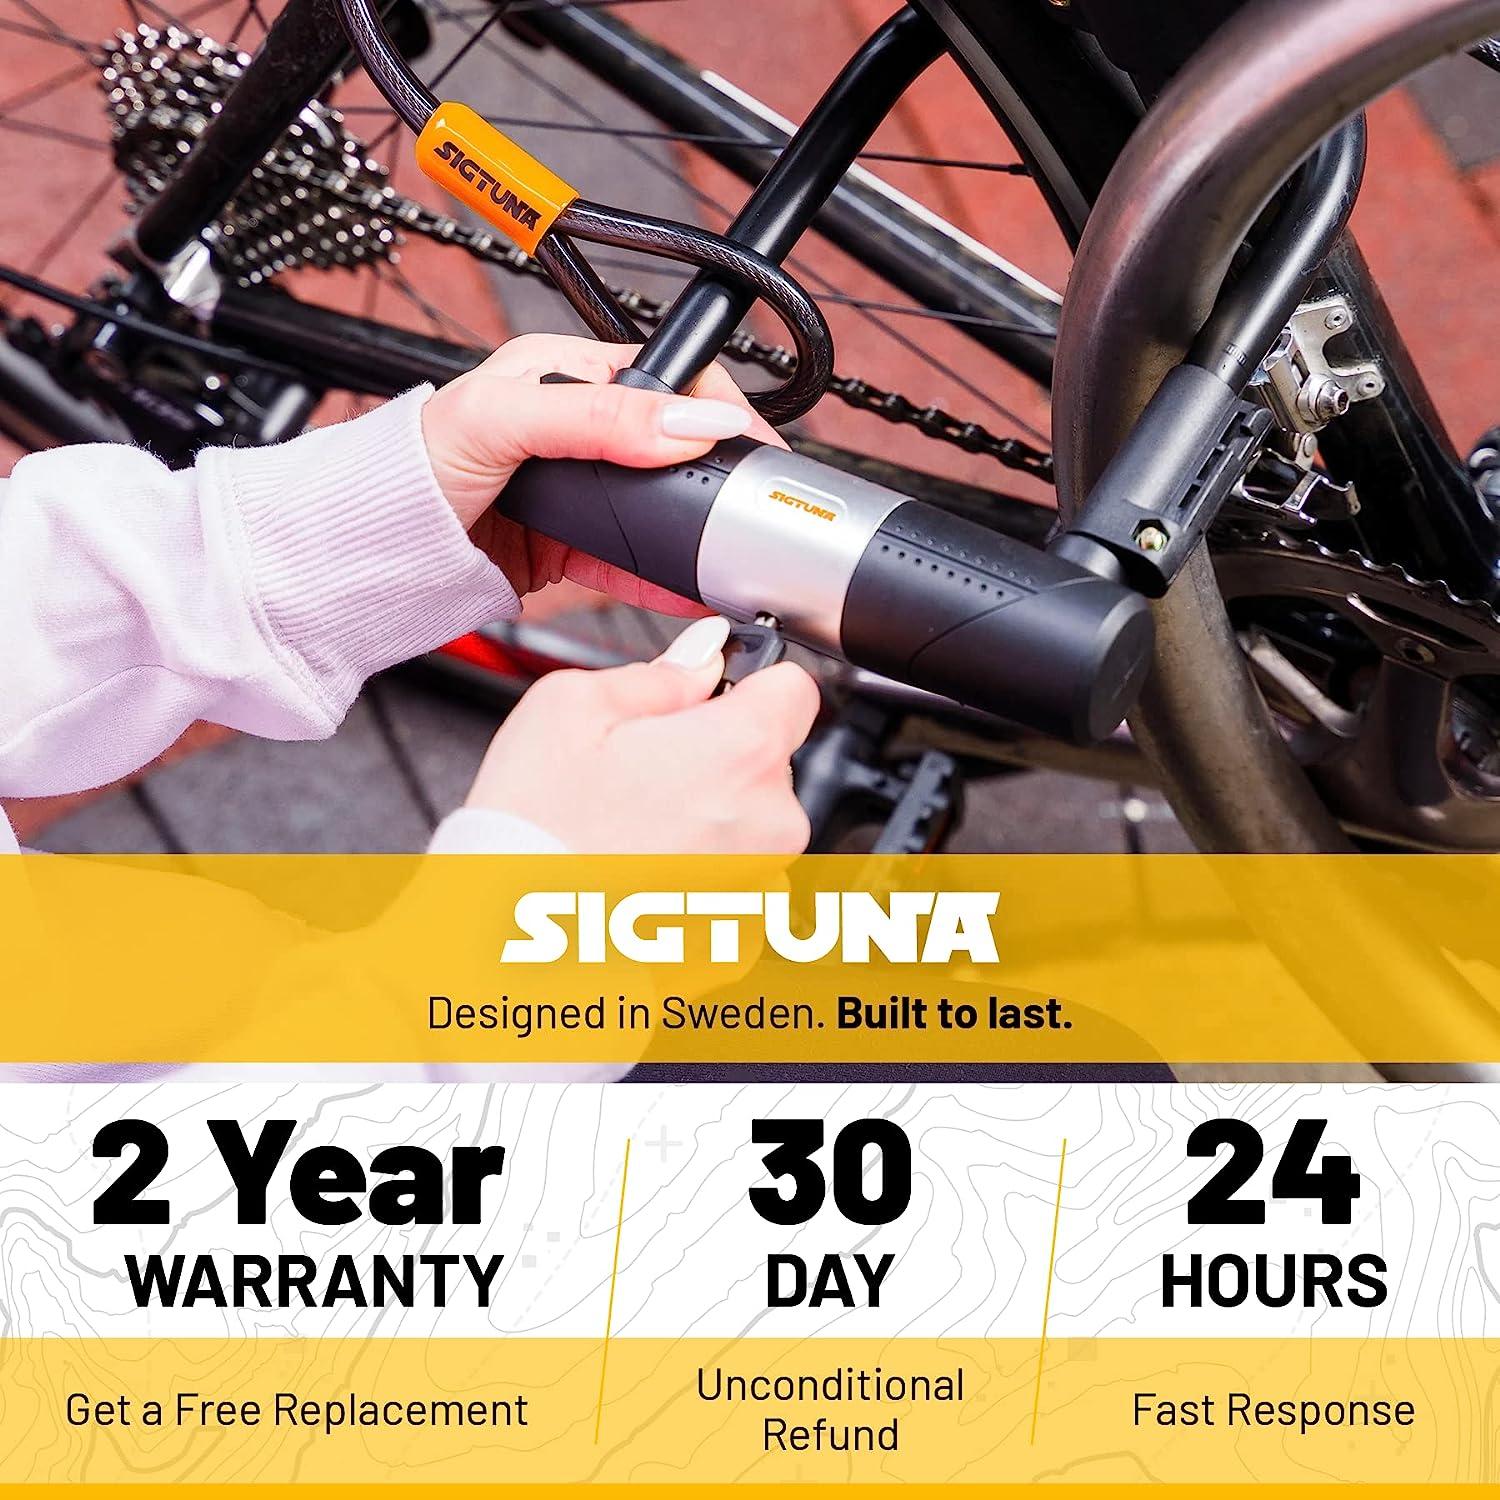 SIGTUNA Bike Lock with Bicycle Lock Mount Holder, High Security Bike Locks,  16mm Heavy Duty U-Lock Shackle and 1200mm Steel Chain Cable Bike Locks